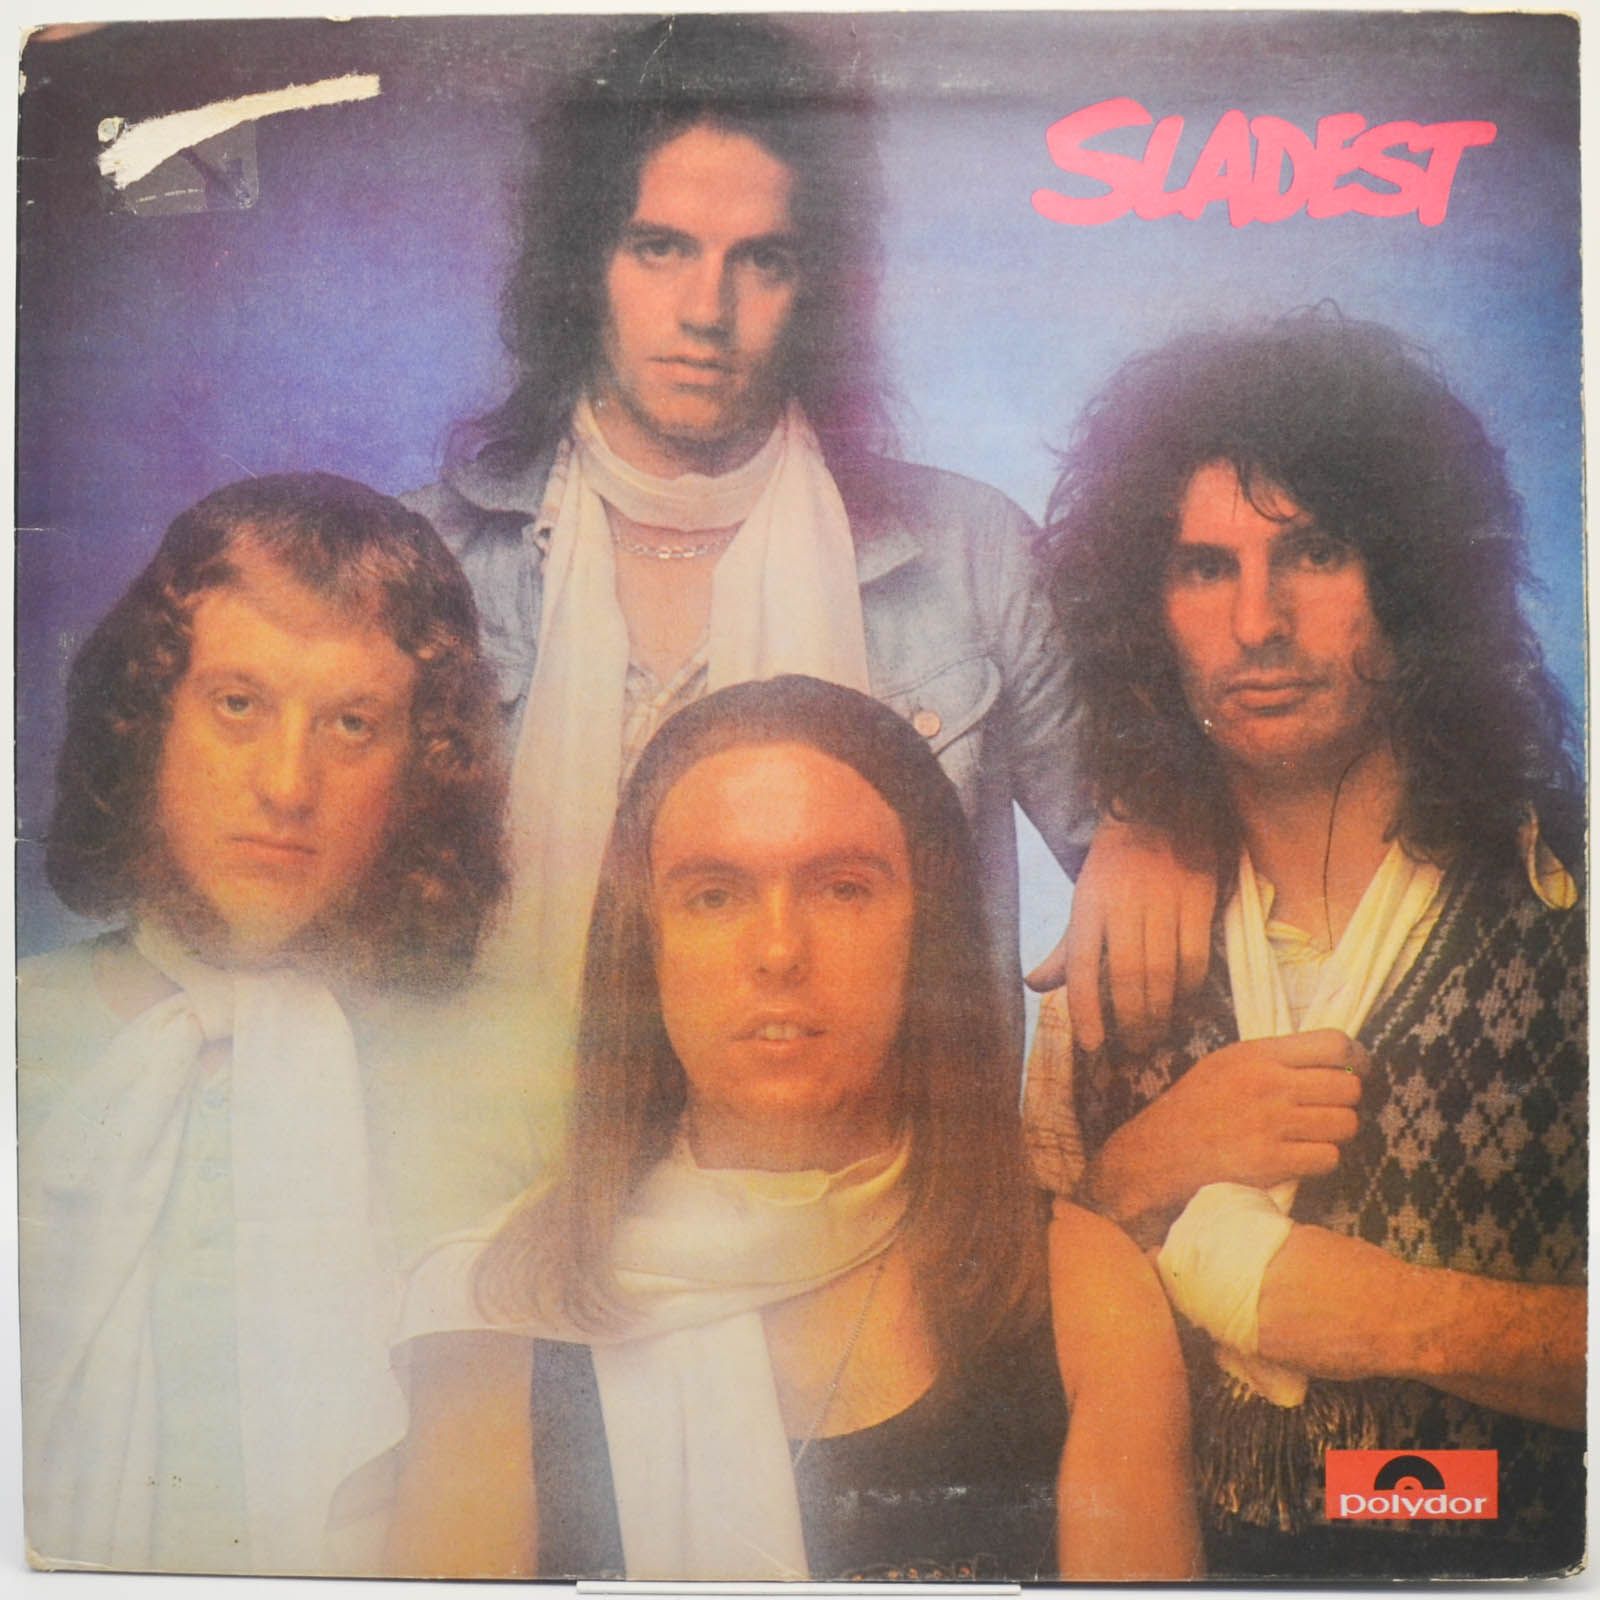 Slade — Sladest (UK, booklet), 1973